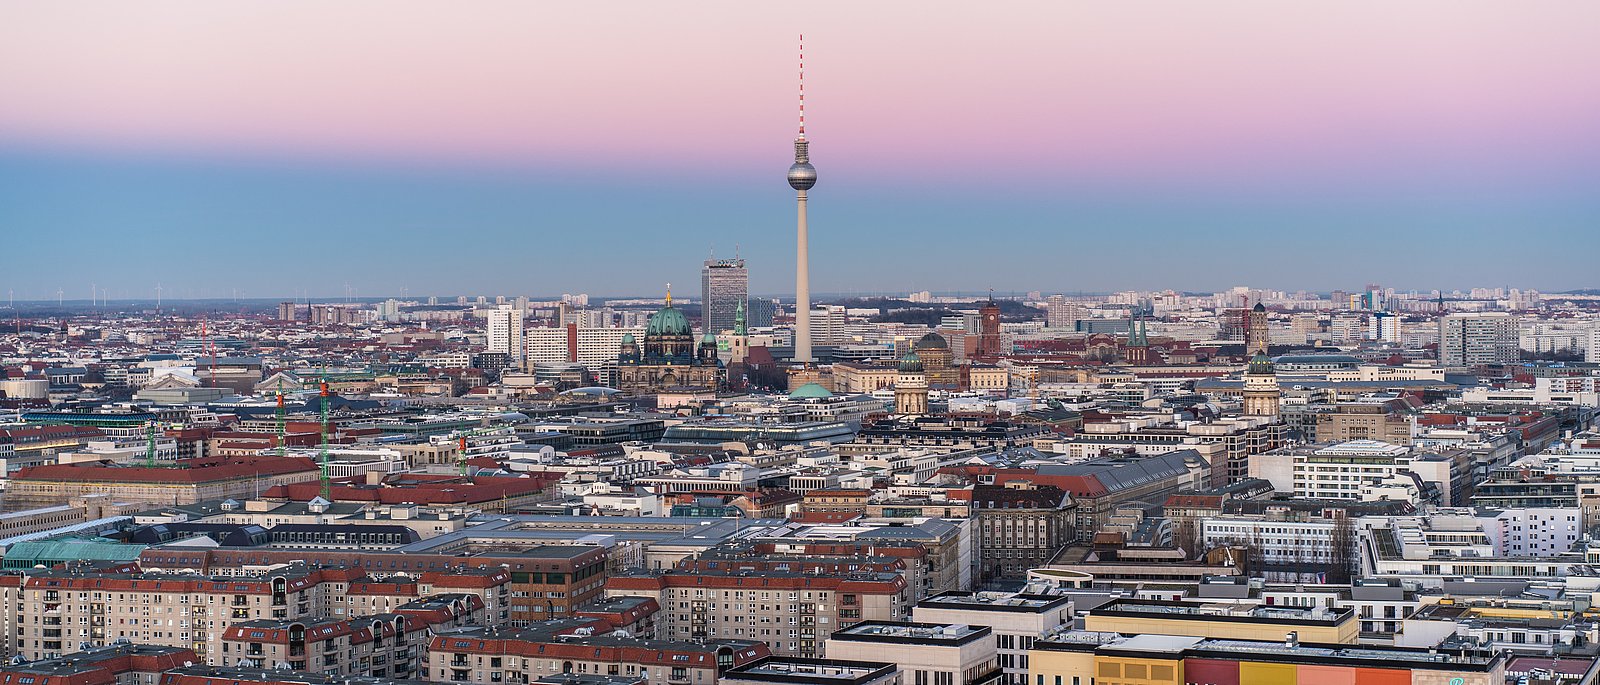 Sonnenuntergang über Berlin in unserer Projektregion Berlin-Brandenburg